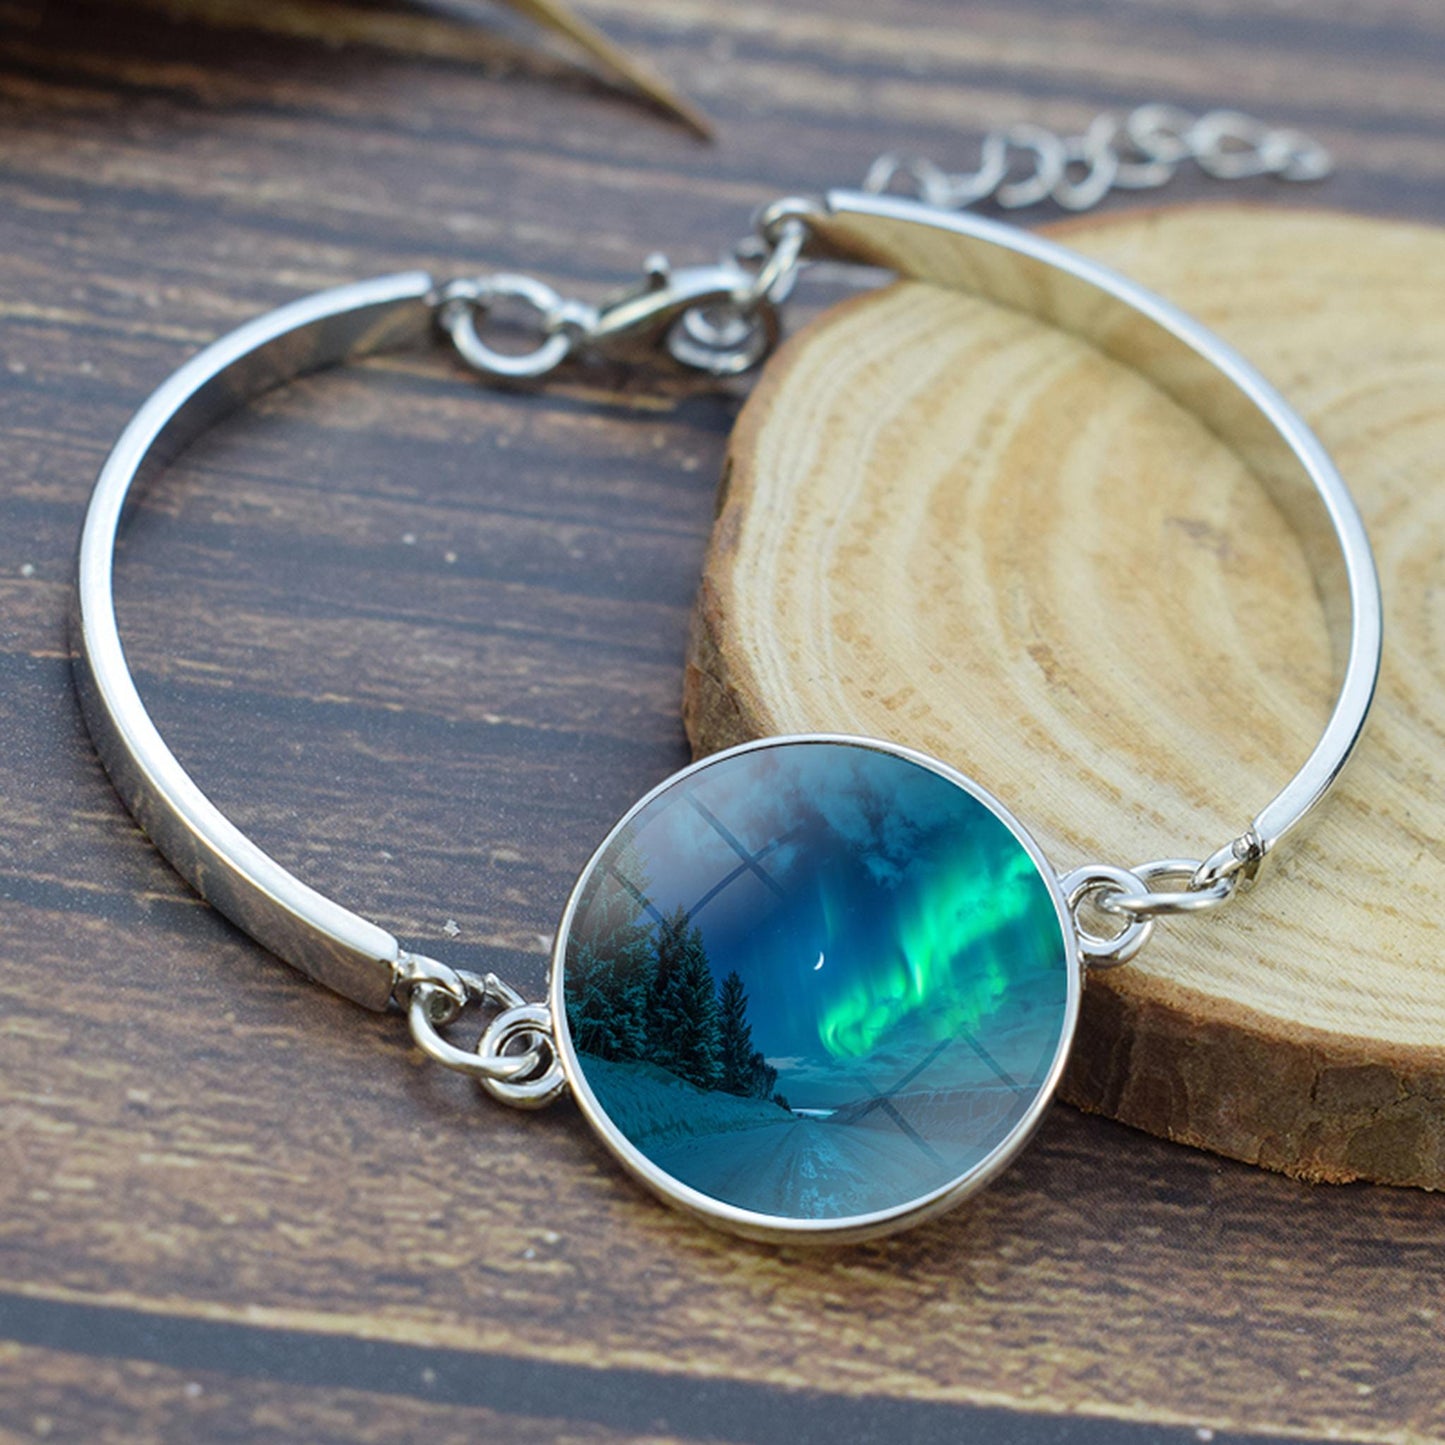 Unique Aurora Borealis Bangle Bracelet - Northern Light Jewelry - Glass Cabochon Silver Plated Bracelet - Perfect Aurora Lovers Gift 15